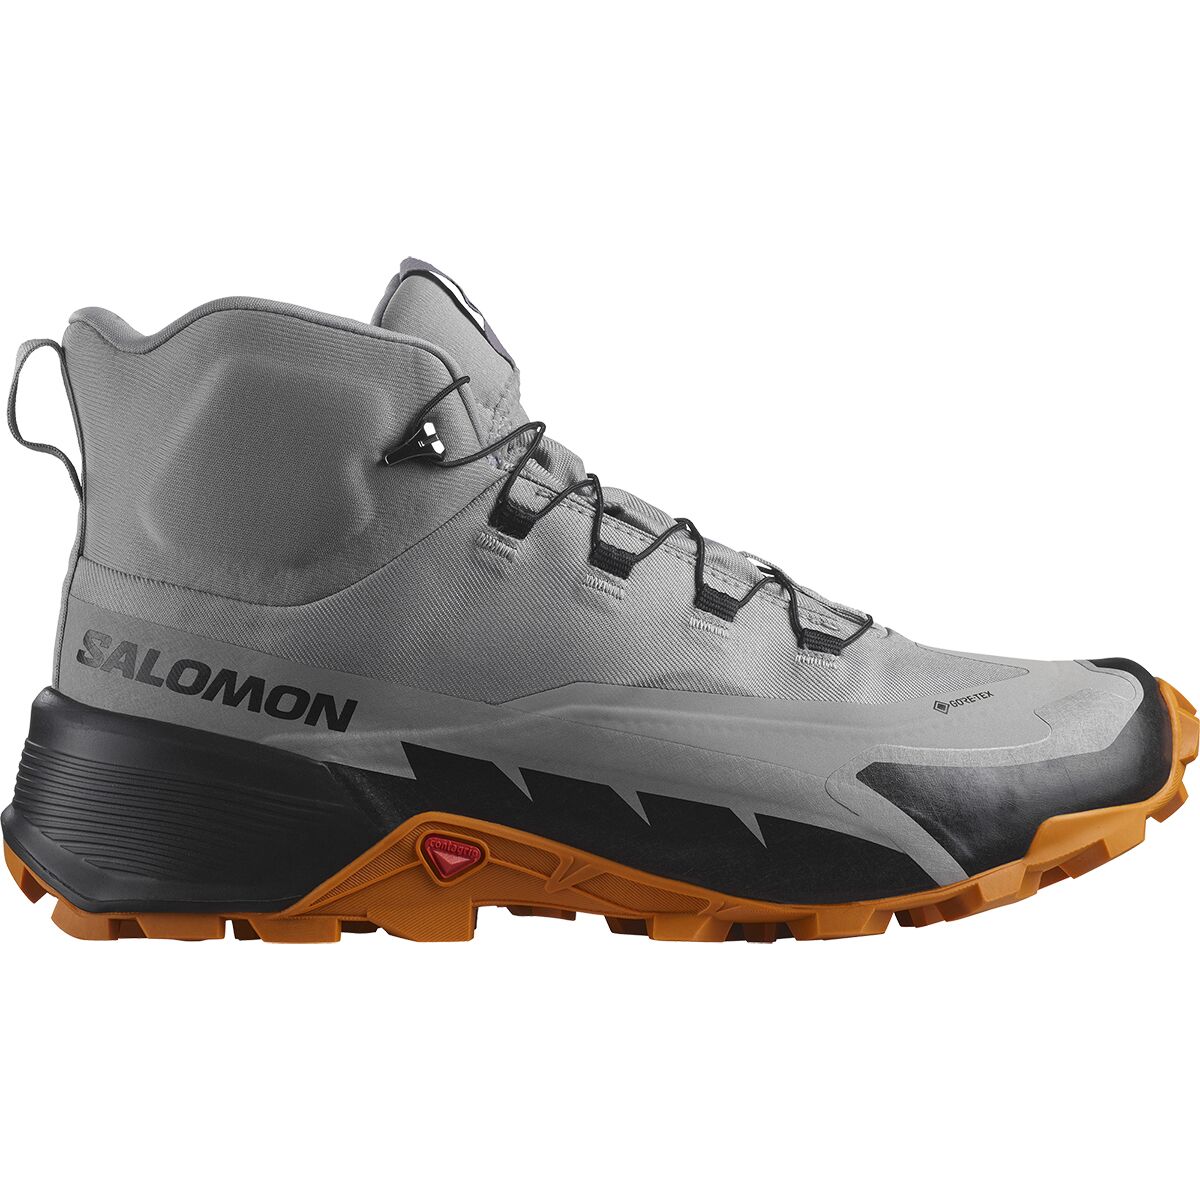 Salomon Cross Hike 2 Mid GTX Boot - Men's